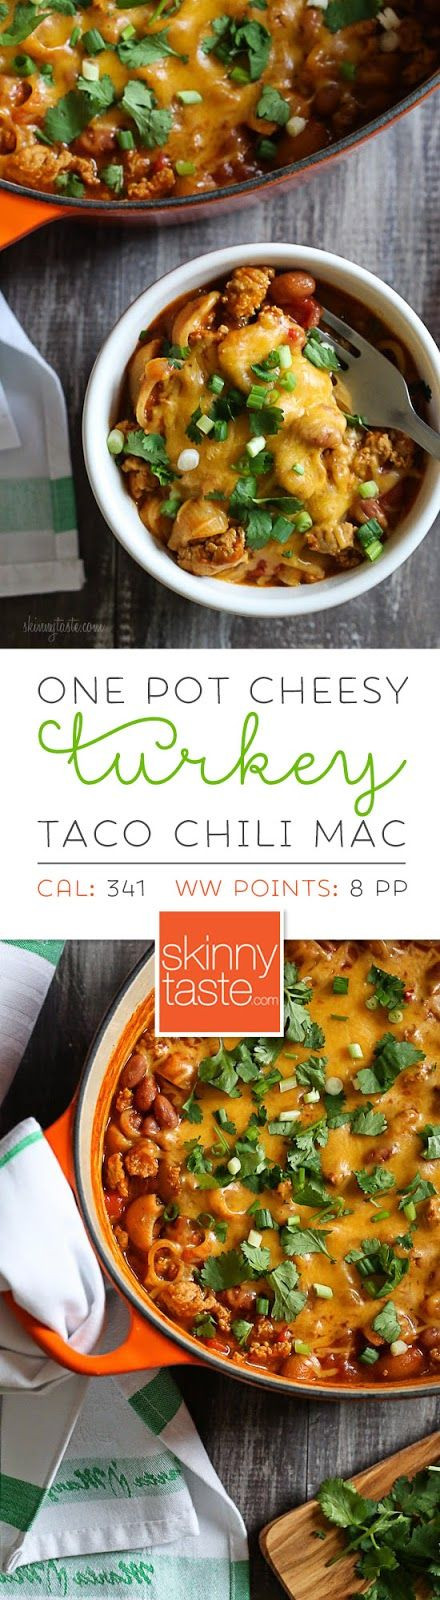 Crockpot Turkey Chili Skinnytaste
 e Pot Cheesy Turkey Taco Chili Mac – pure fort food